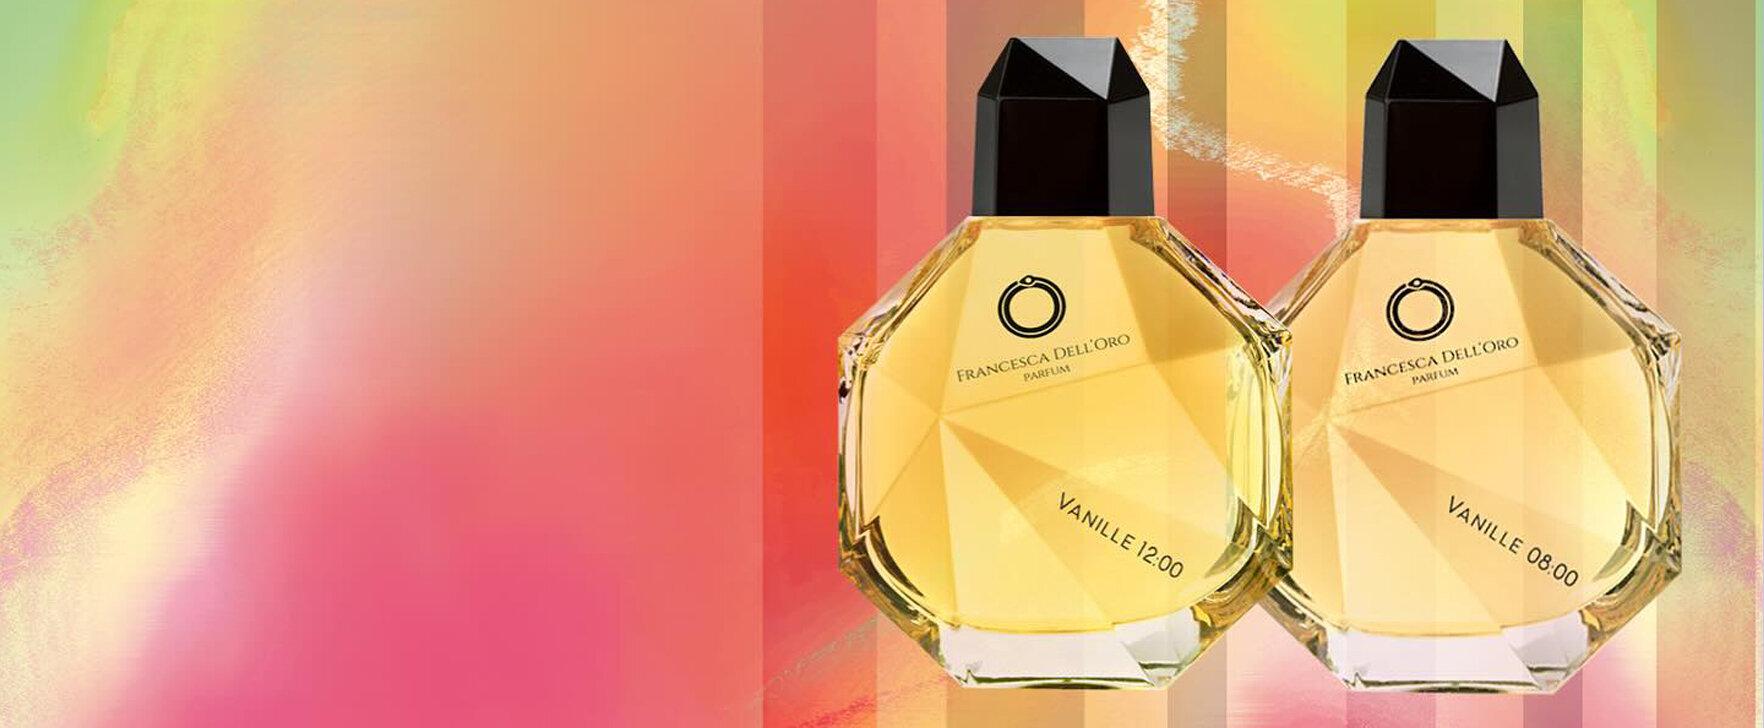 All-Day Vanilla: The new fragrances "Vanilla 08:00" and "Vanilla 12:00" by Francesca Dell'Oro